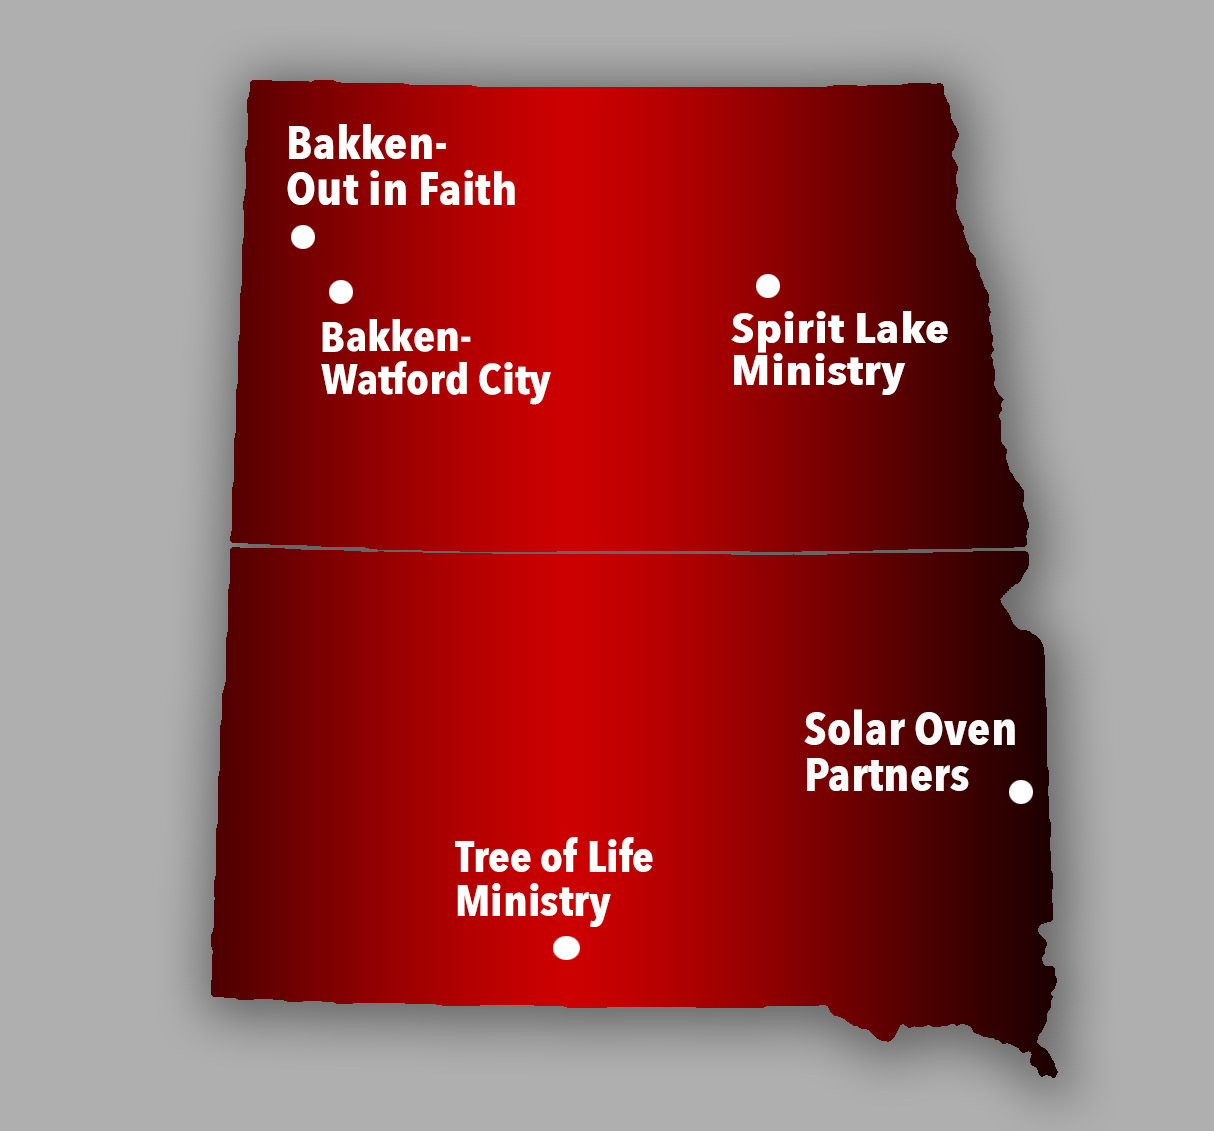 Dakotas Mission Locations